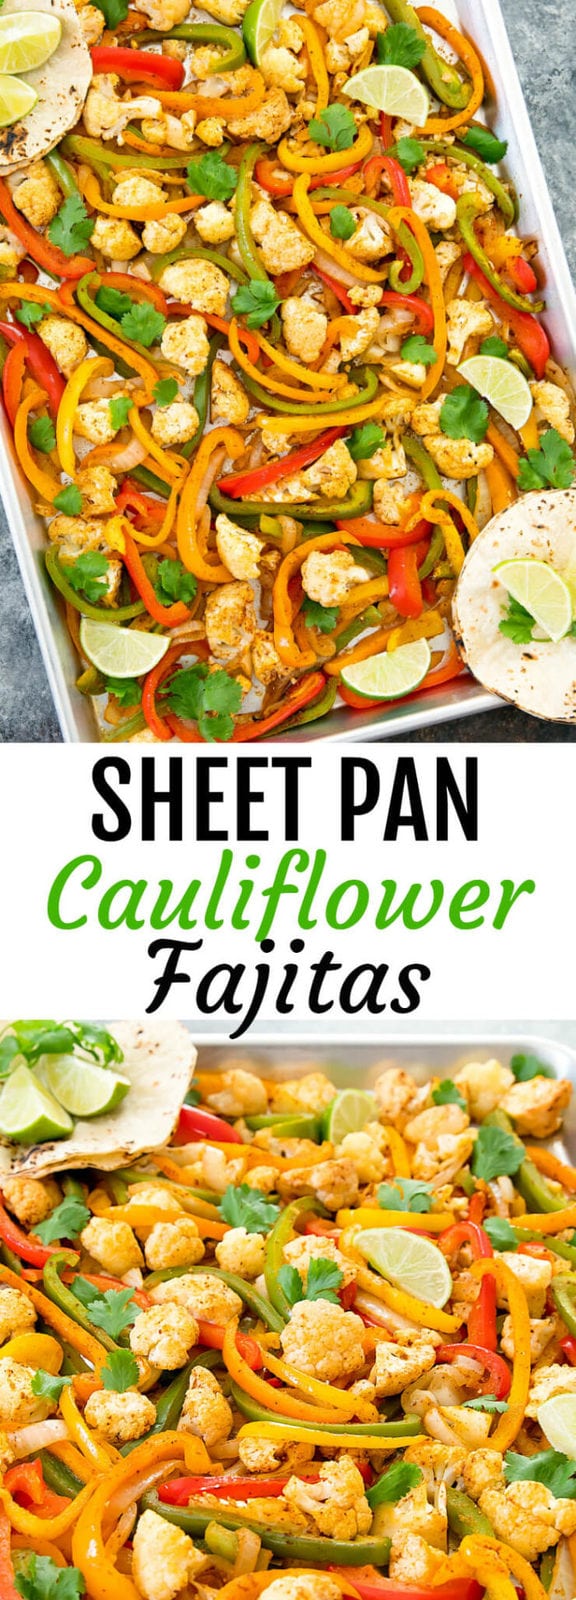 Sheet Pan Cauliflower Fajitas